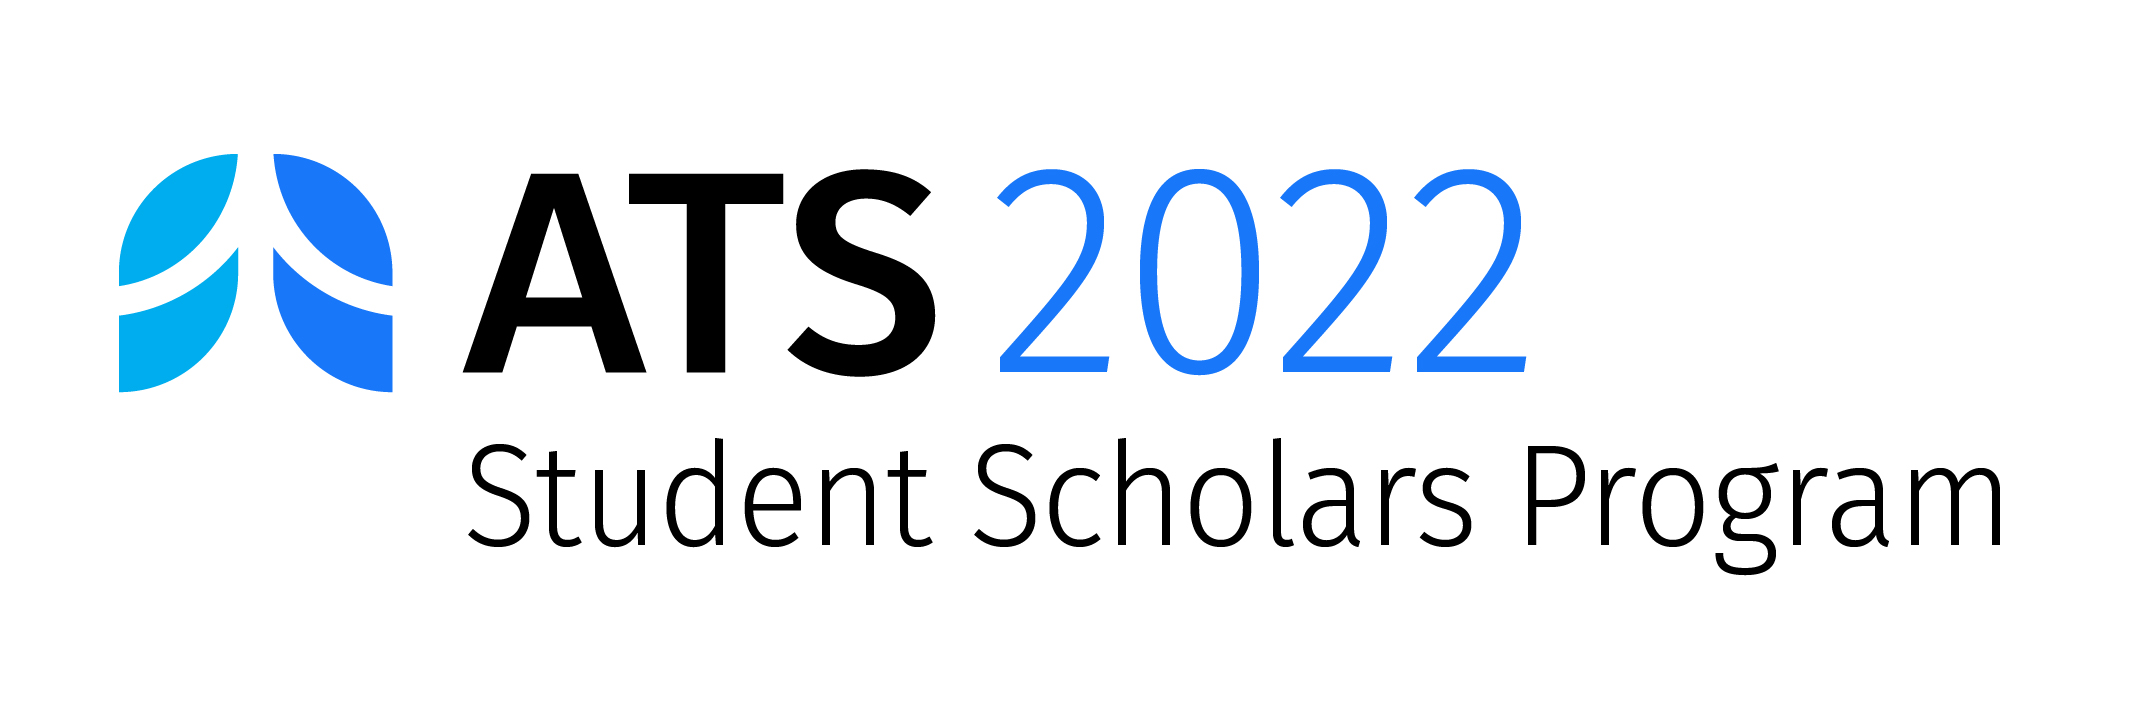 student-scholars-logo.jpg